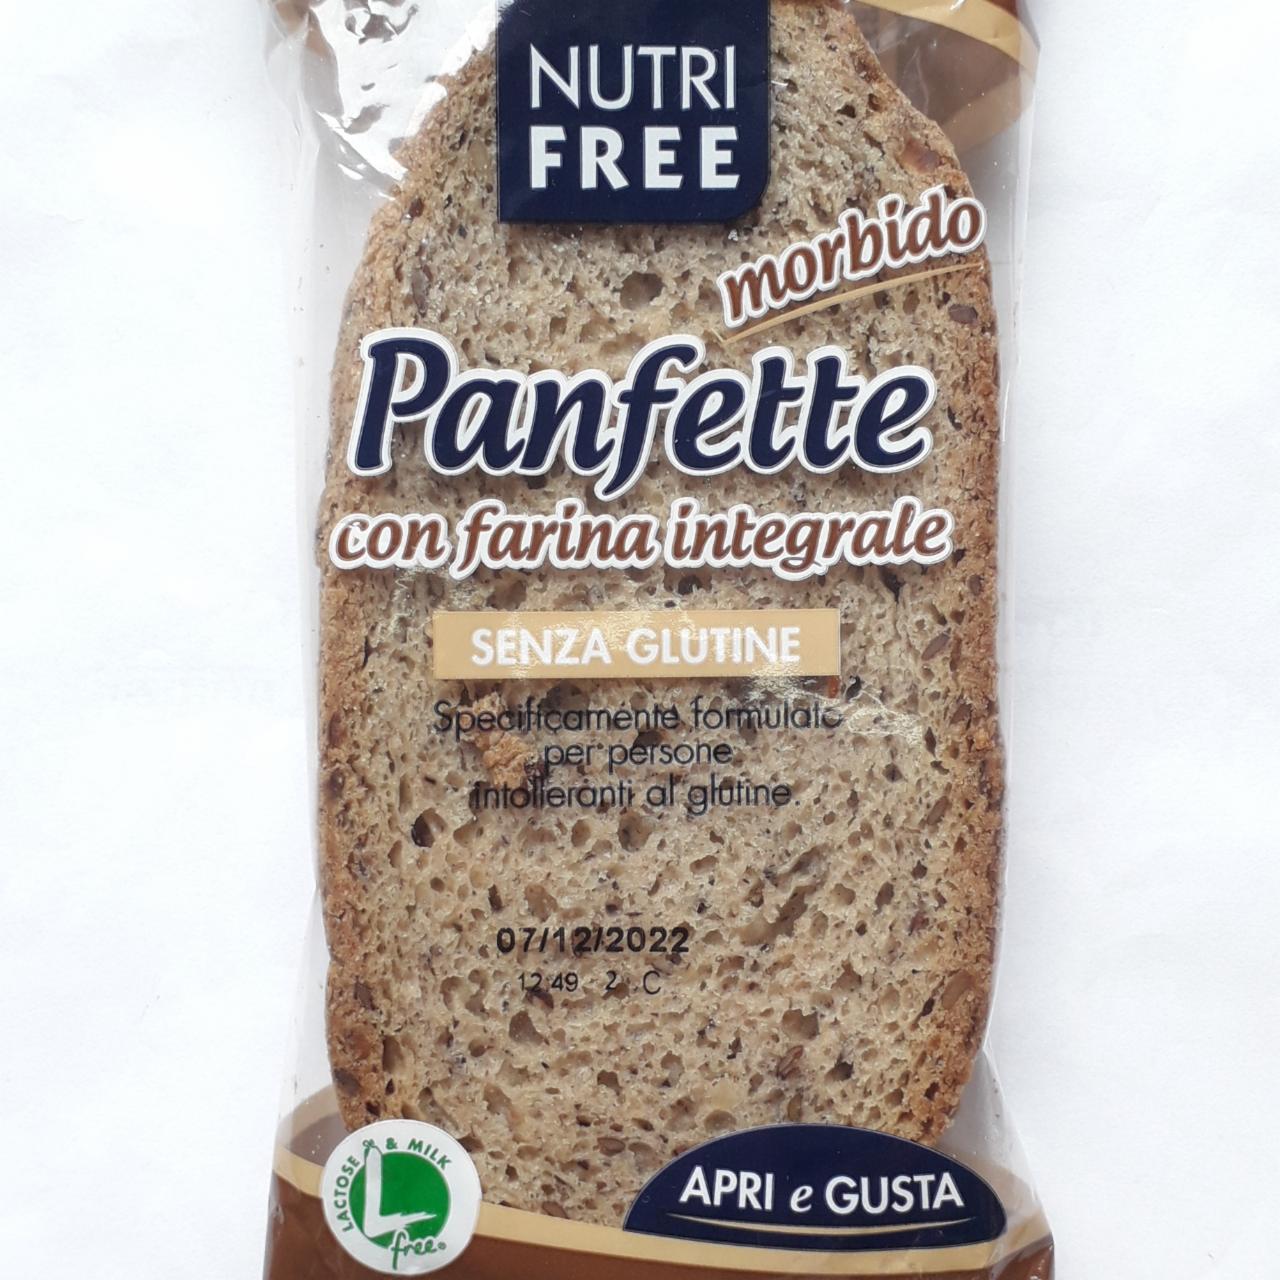 Fotografie - Panfette morbido con farina integrale sensa glutine Nutri Free